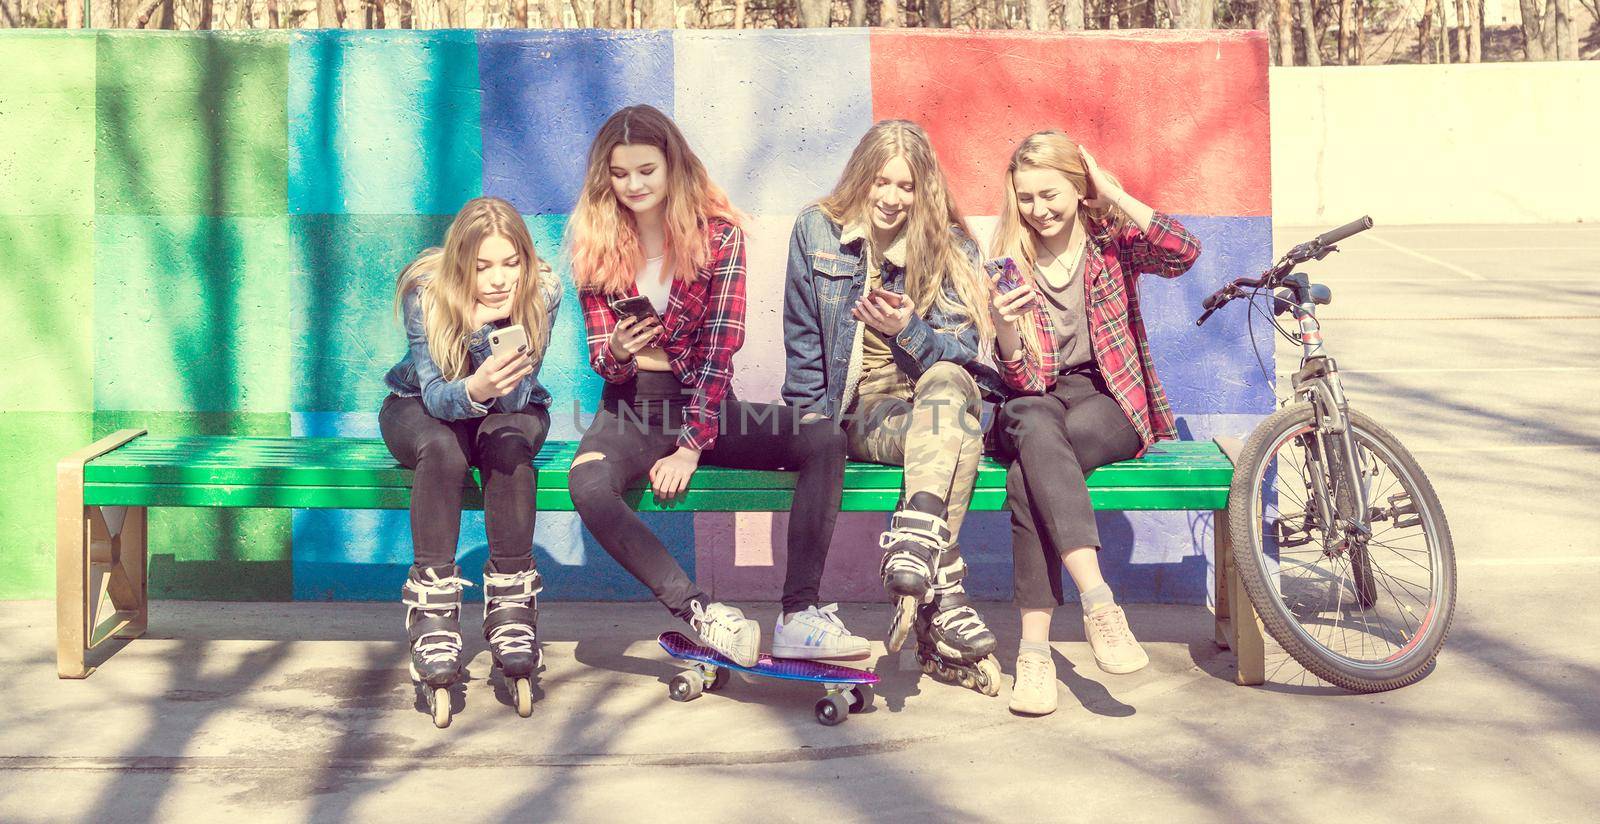 Trendy young girls in a skateboard park by tan4ikk1